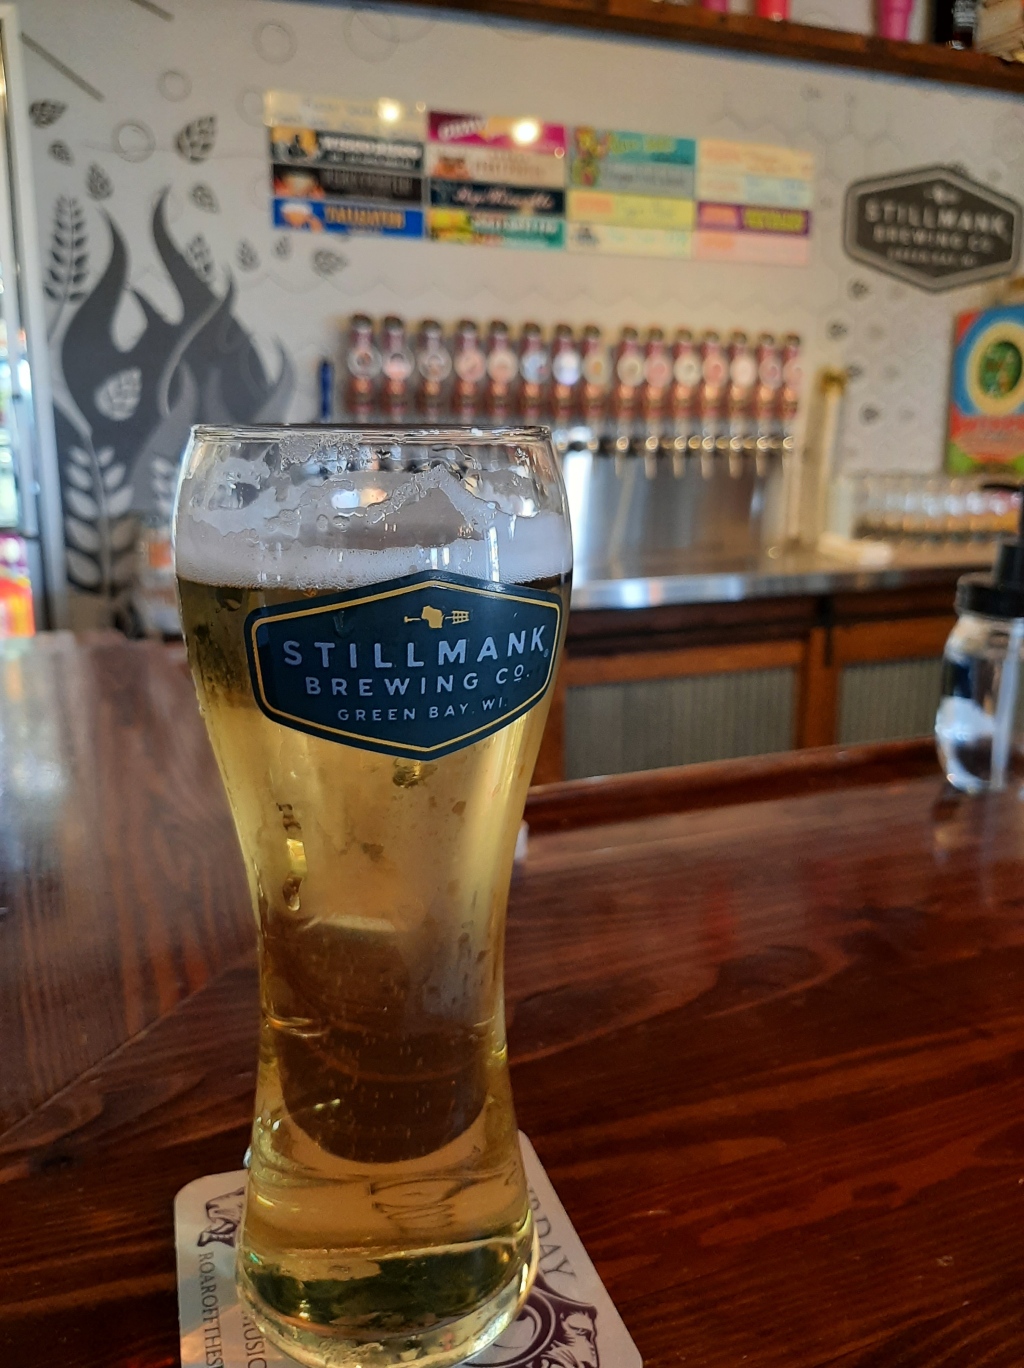 Stillmank Brewing Co.